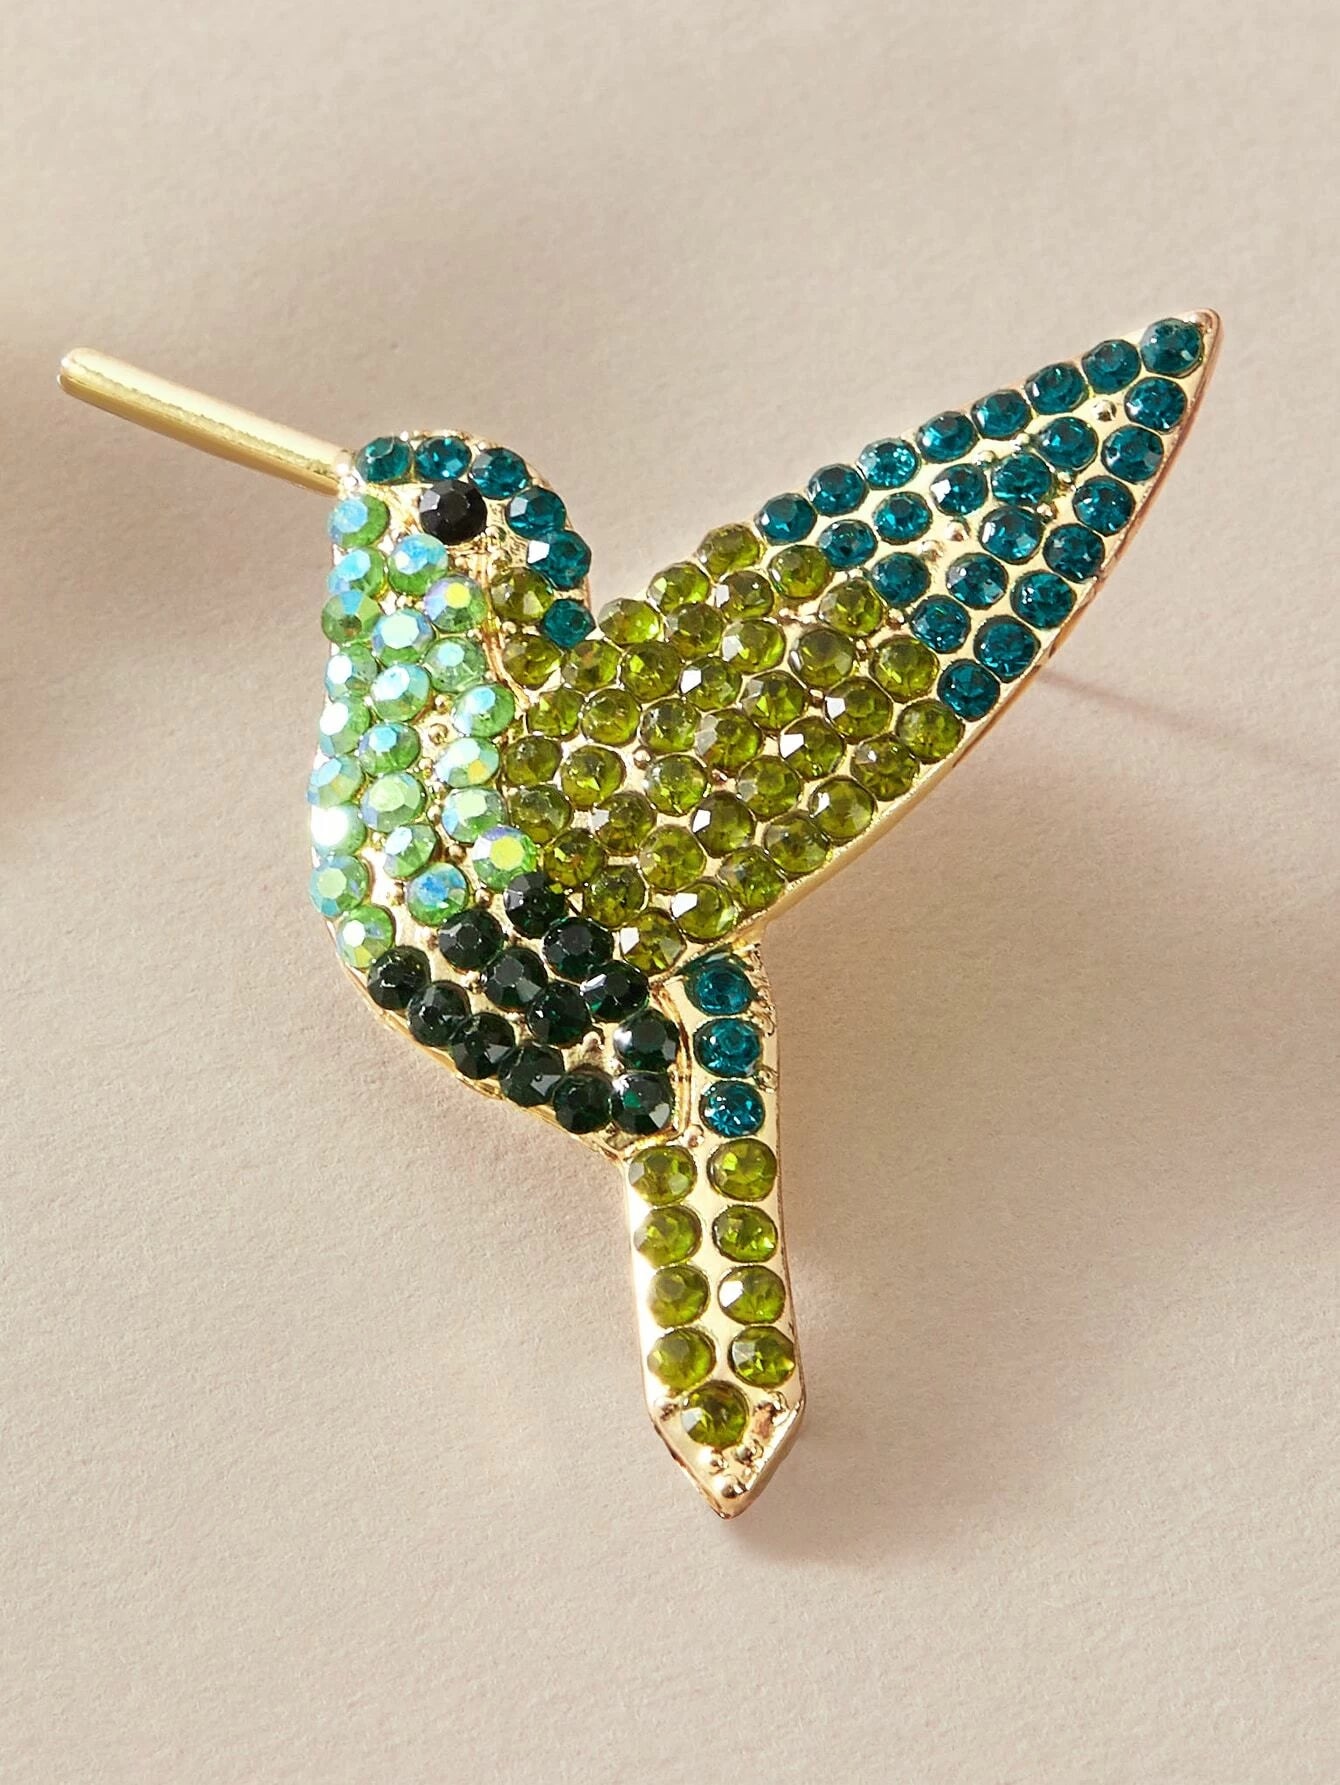 1pair Small Bird Shaped Rhinestone Earrings For Women, Cute Animal Design Fun Earrings